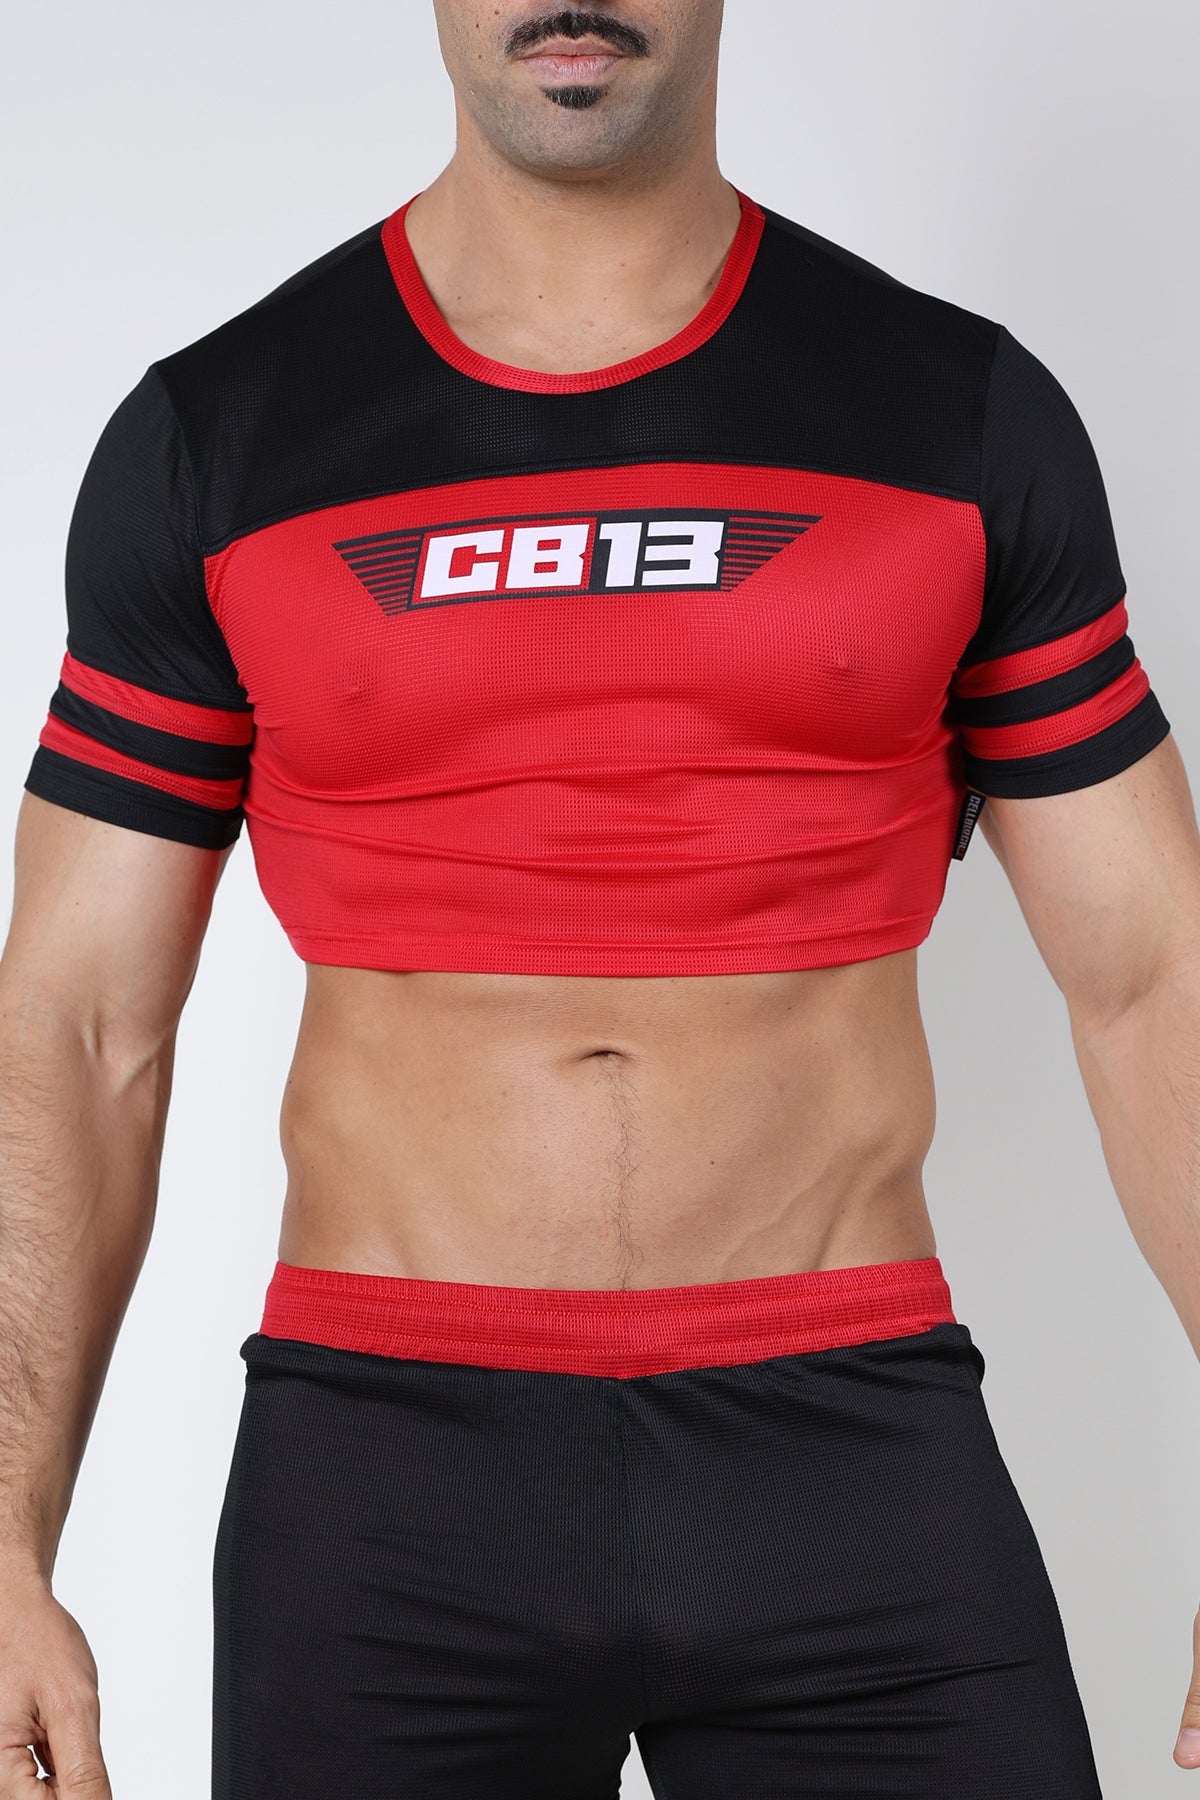 CellBlock 13 Red Marathon Cutoff Shirt